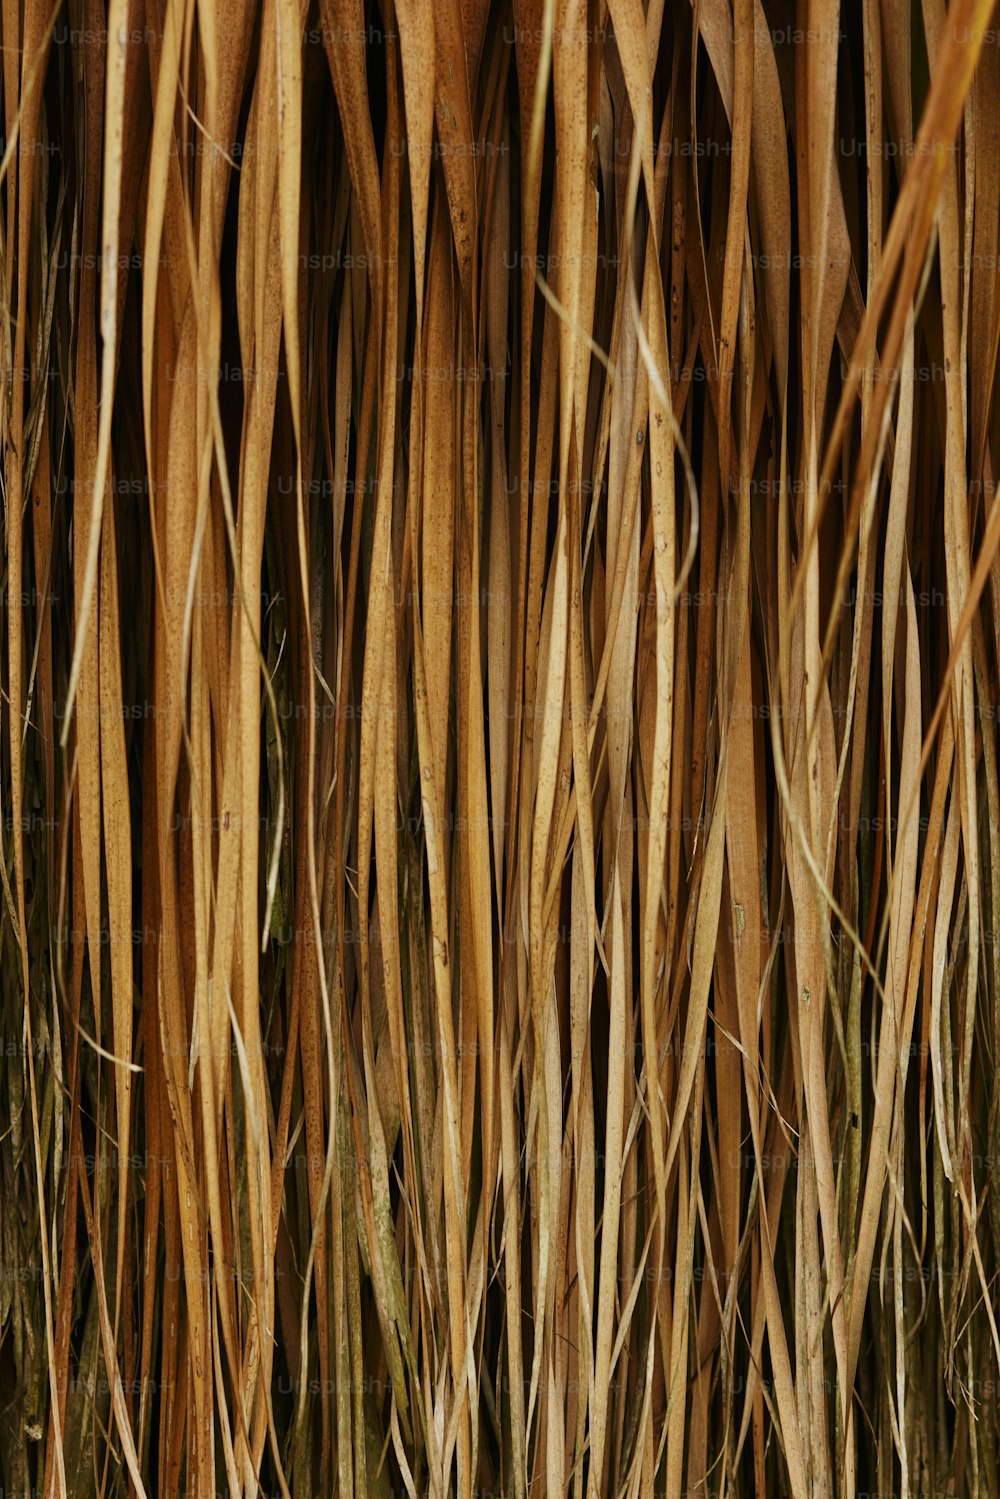 a close up of a bunch of brown grass